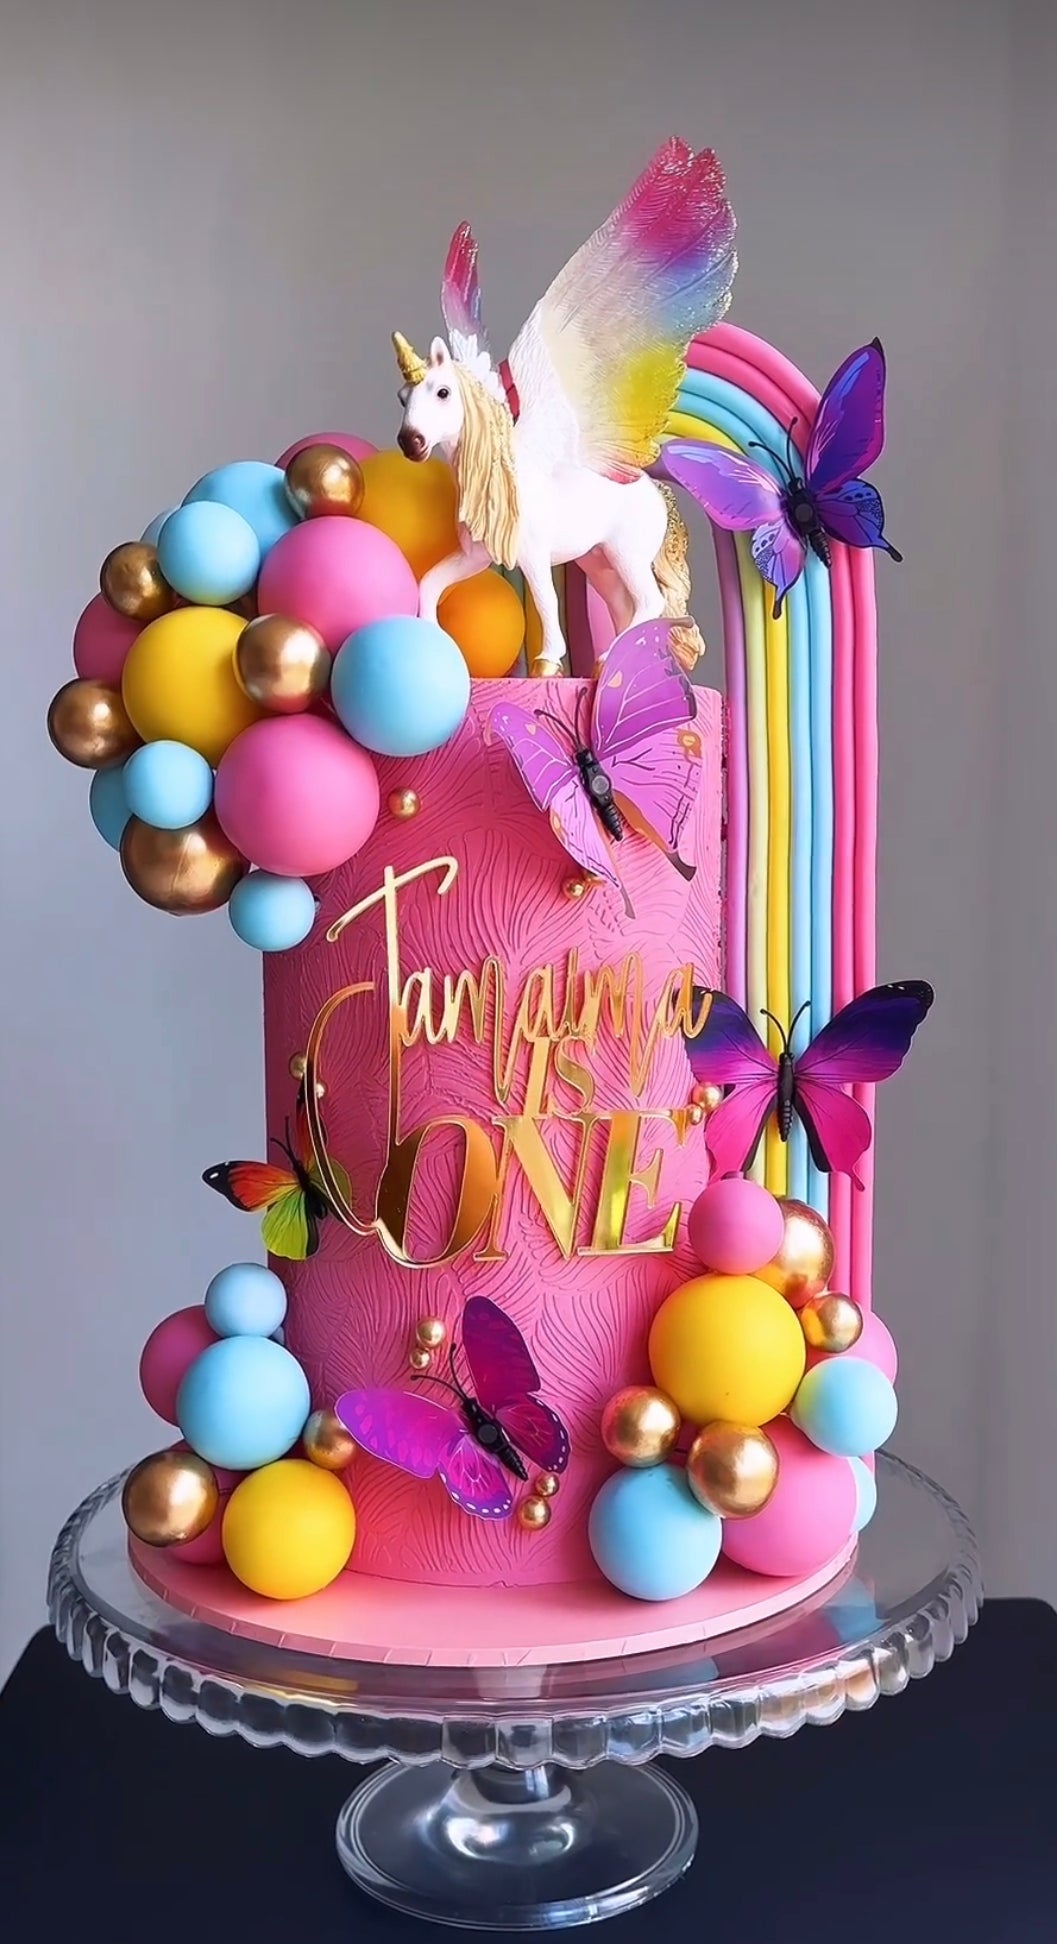 'Name is Age' Acrylic cake charm